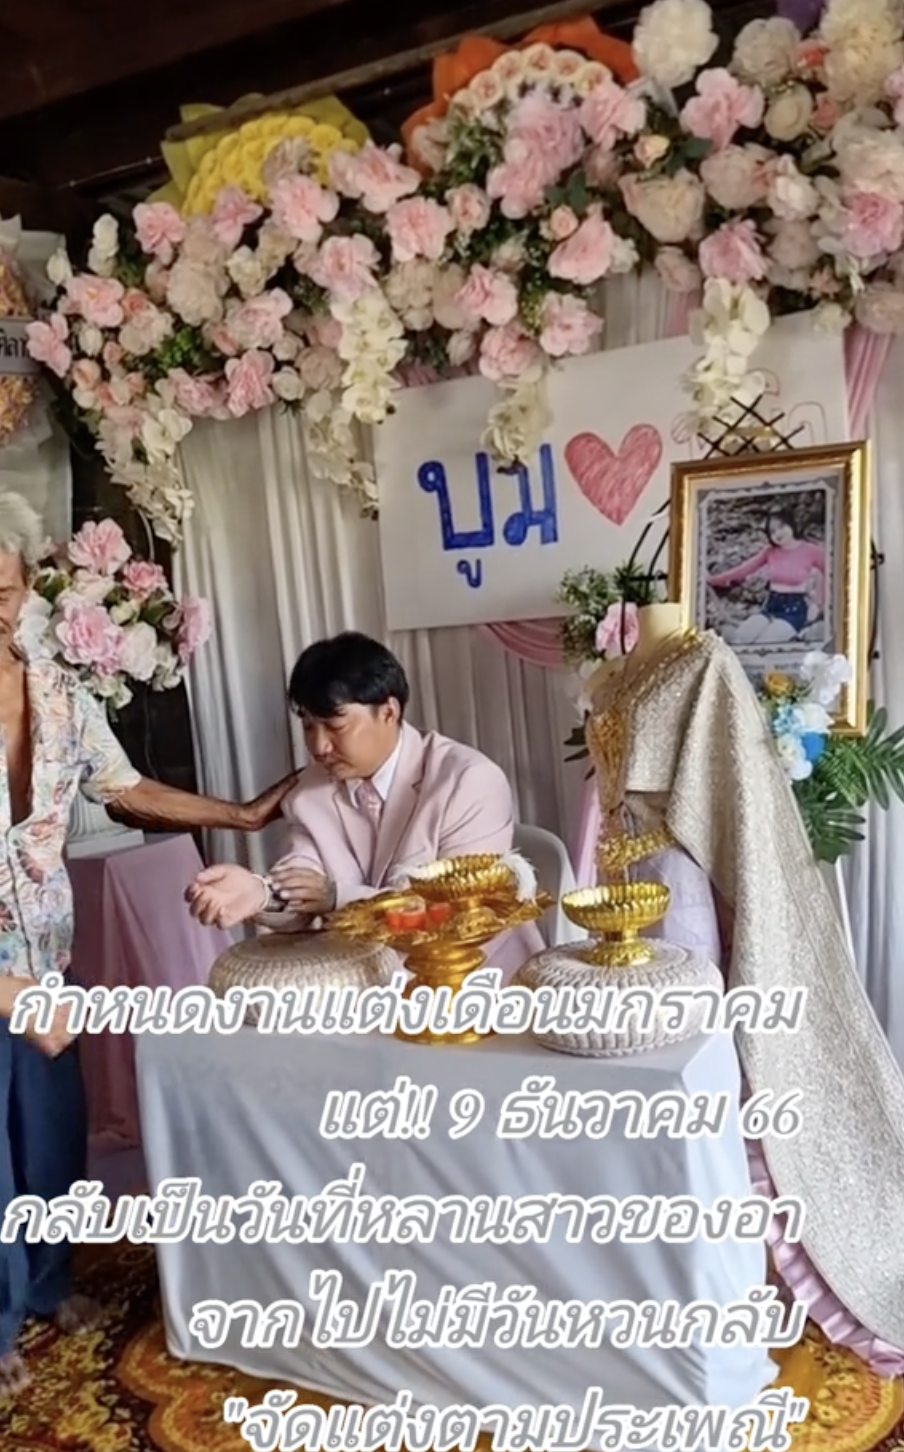 Thai man holds wedding with deceased gf 1